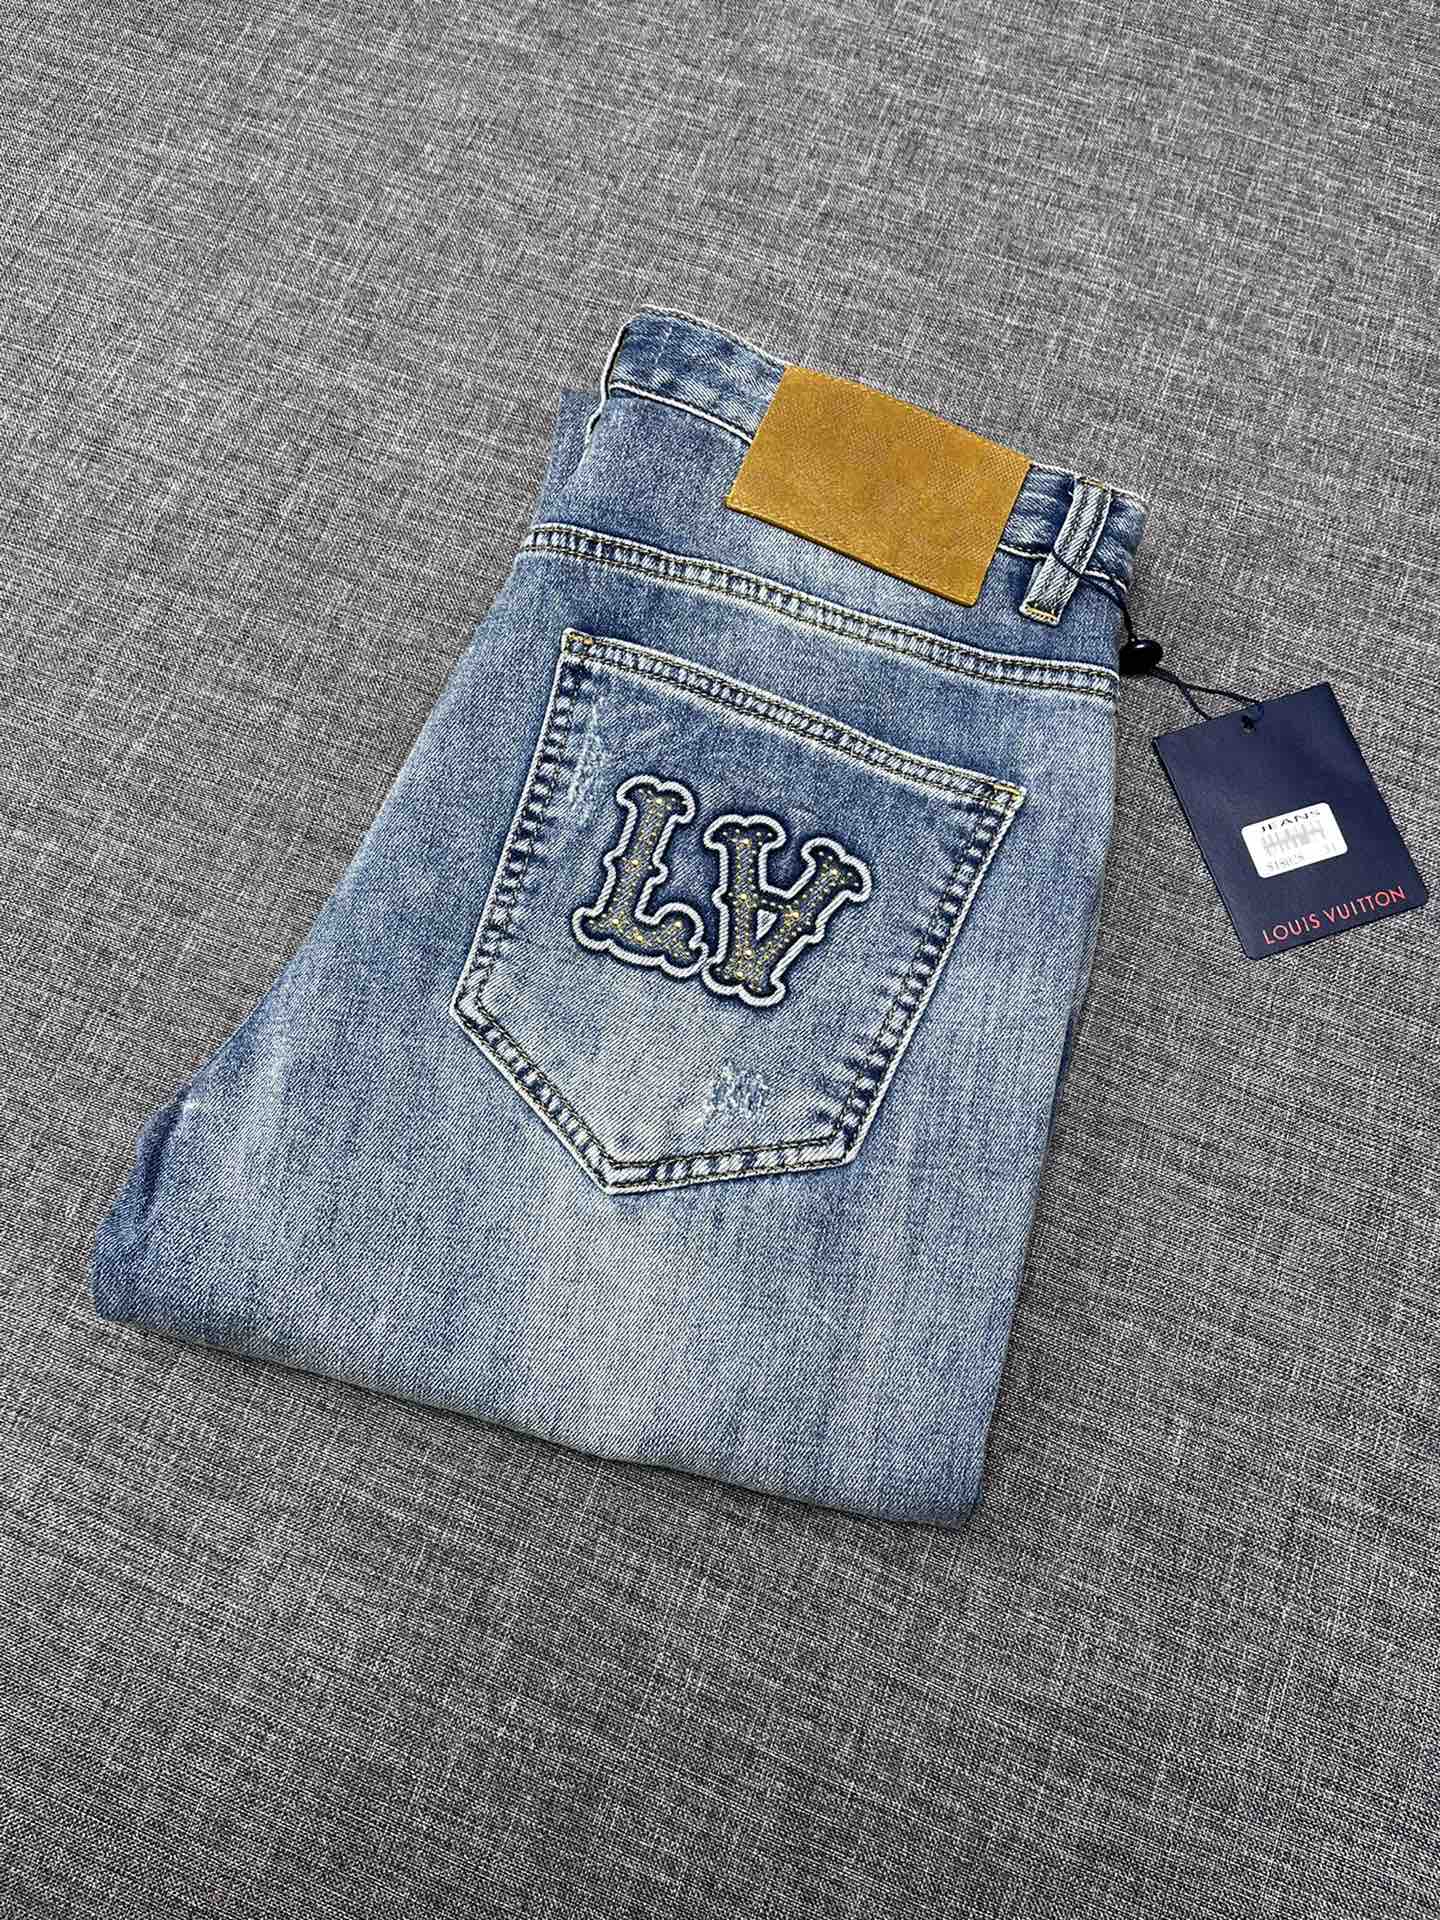 Louis Vuitton Clothing Jeans Platinum White Men Spring/Summer Collection Vintage Casual